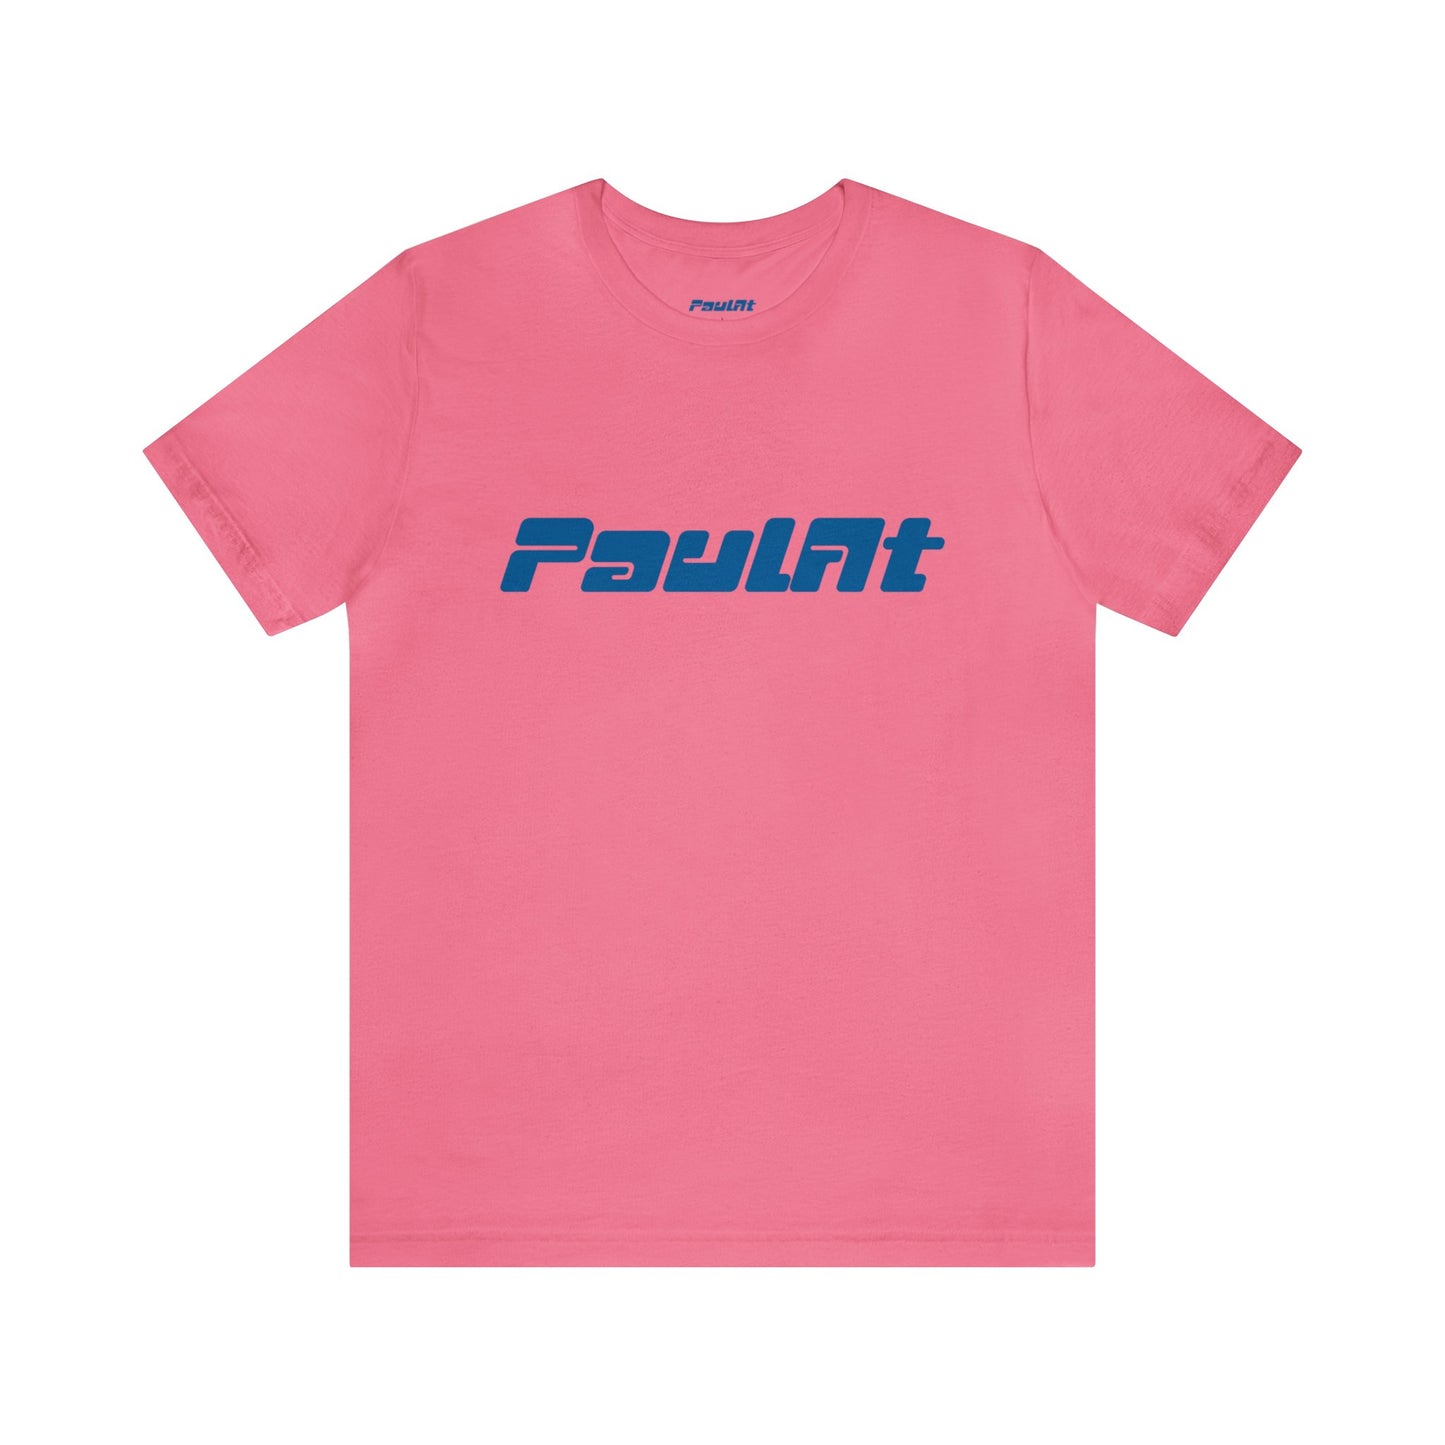 PaulAt Logo Unisex T-Shirt